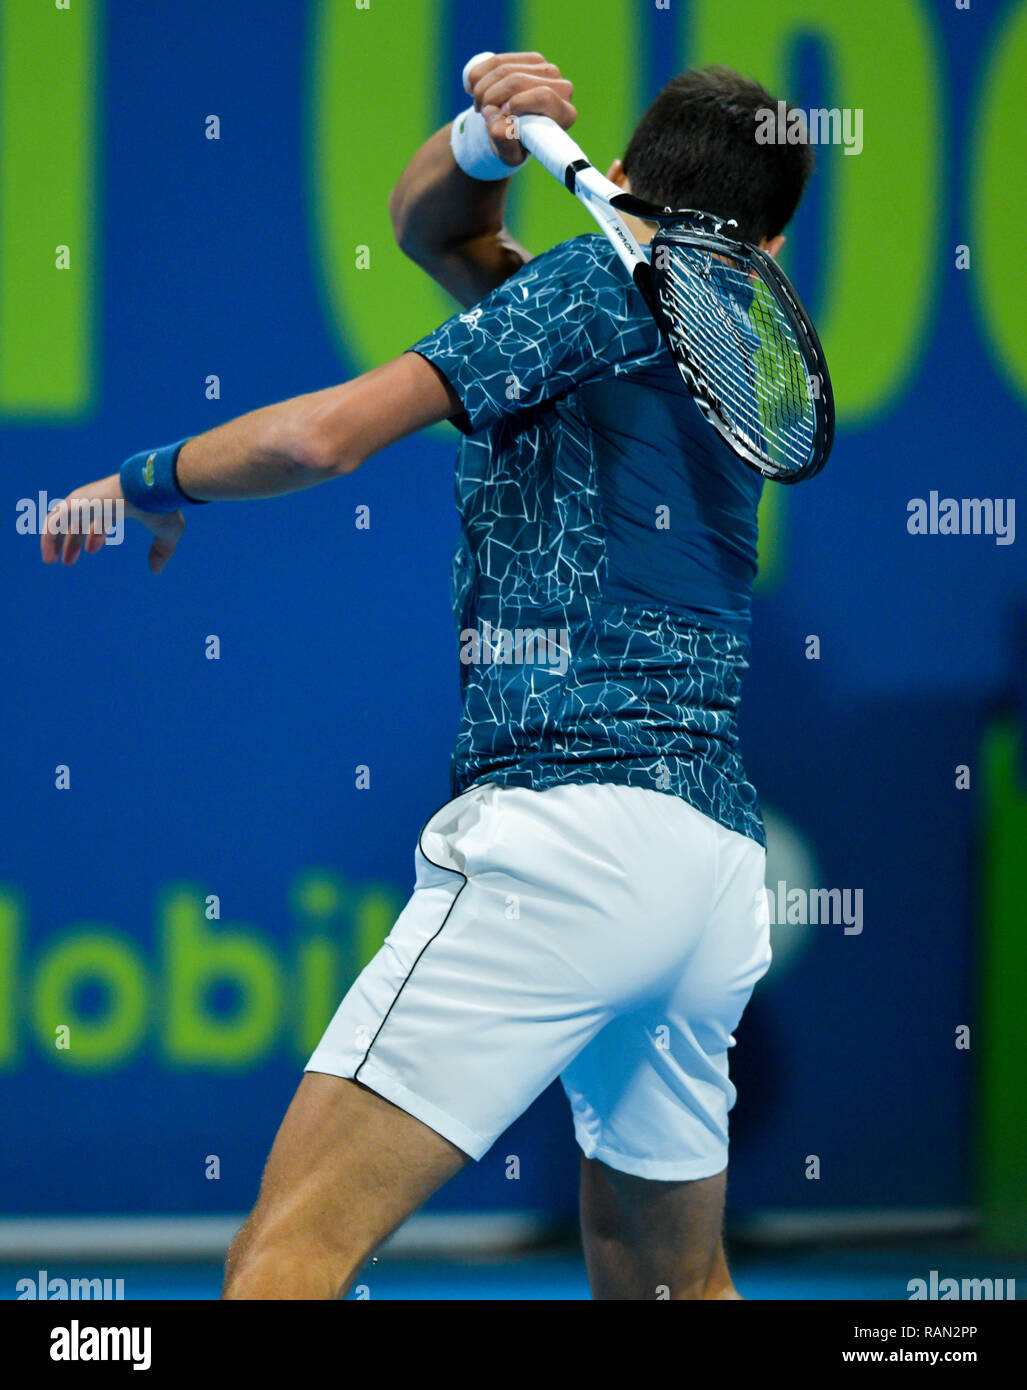 Doha, Qatar. 4th Jan, 2019. (SP)QATAR-DOHA-TENNIS-QATAR Novak Djokovic of  Serbia reacts during the singles semifinal match against Roberto Bautista  Agut of Spain at the ATP Qatar Open tennis tournament in Doha, capital